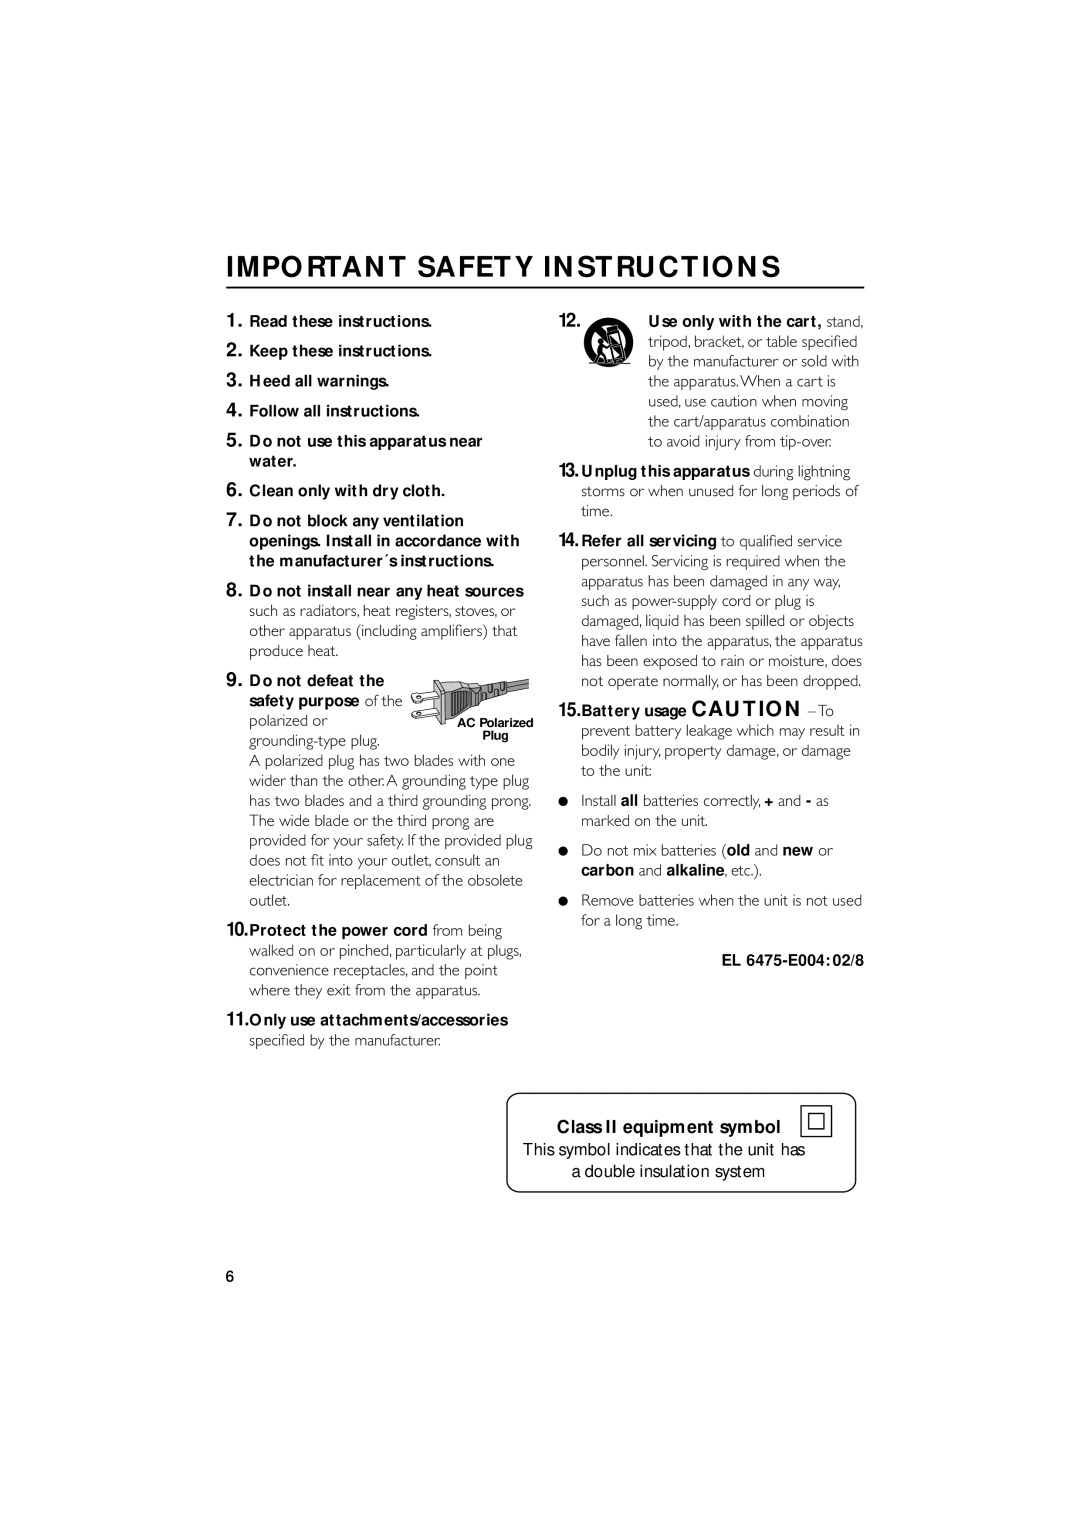 Philips MC-M570/37 warranty Class II equipment symbol, Important Safety Instructions 